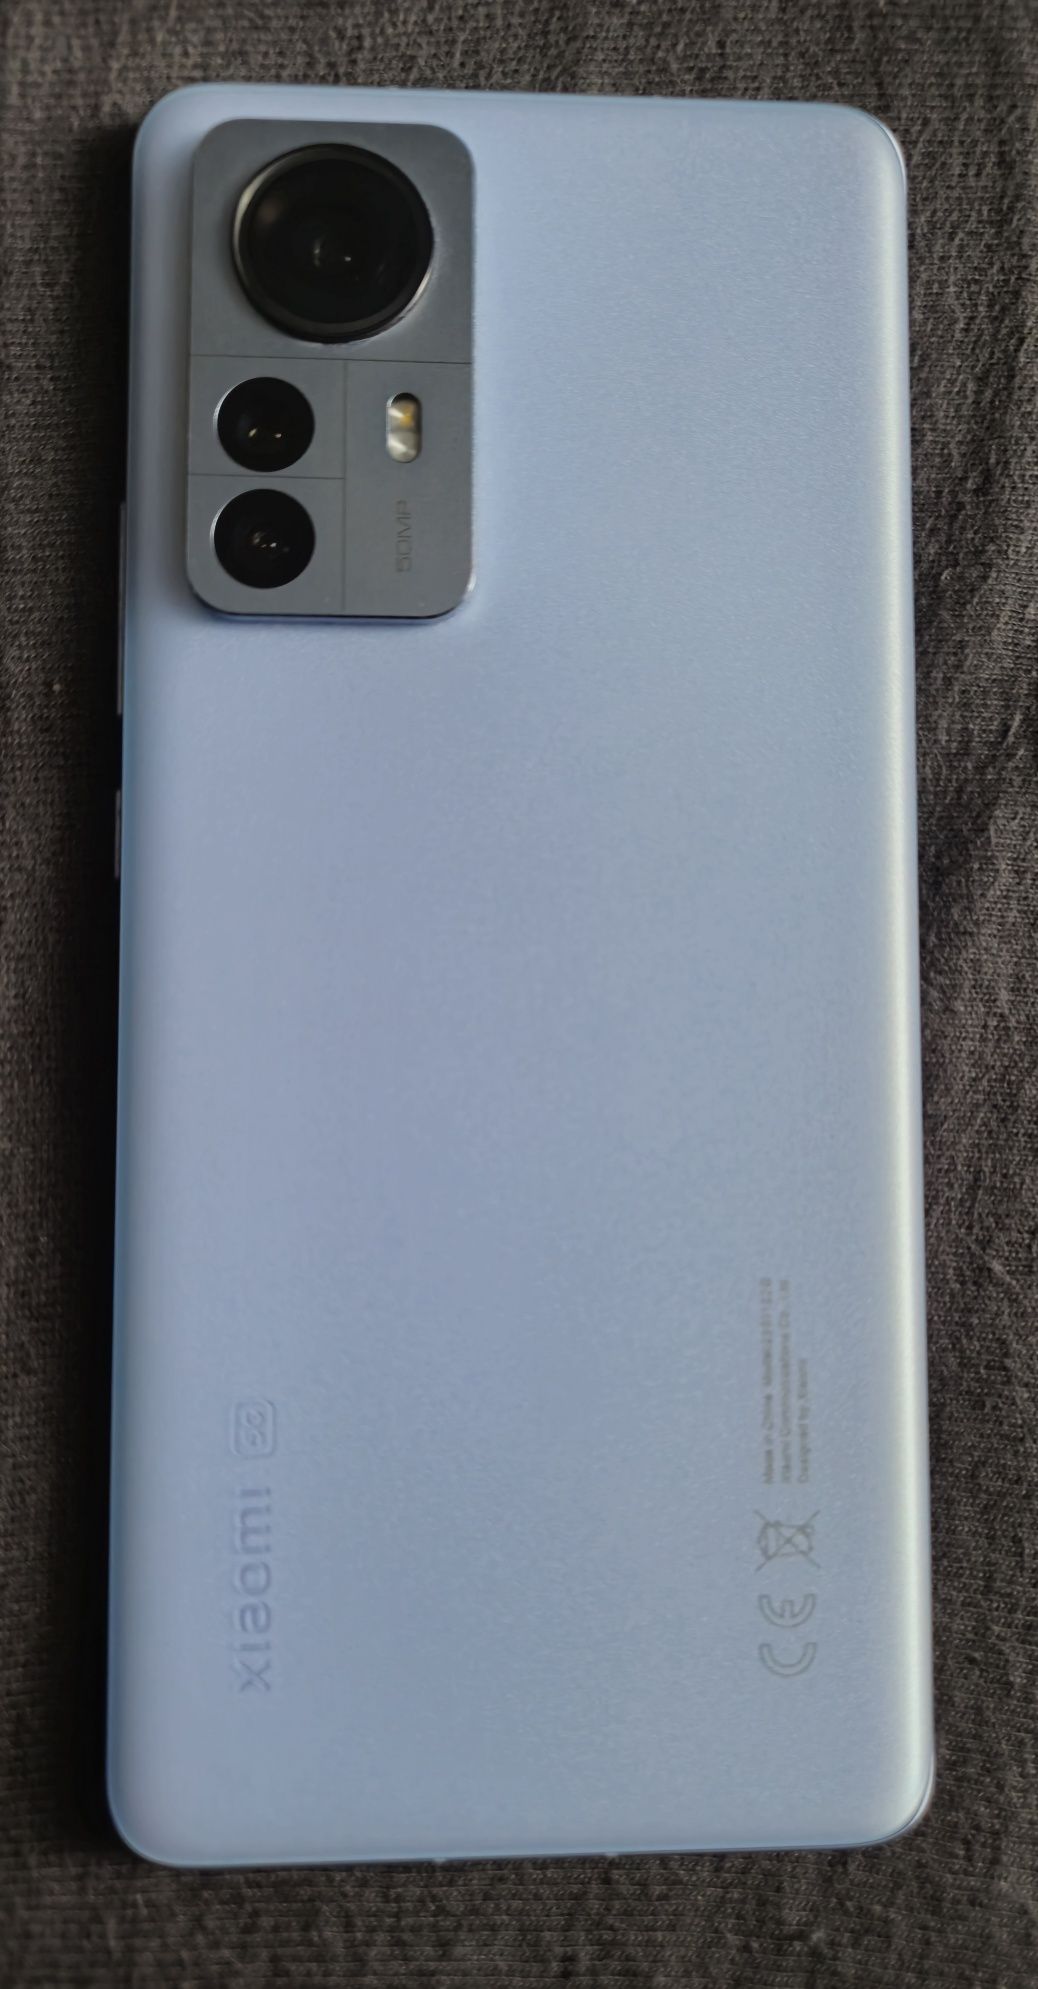 Xiaomi 12 Pro 5G